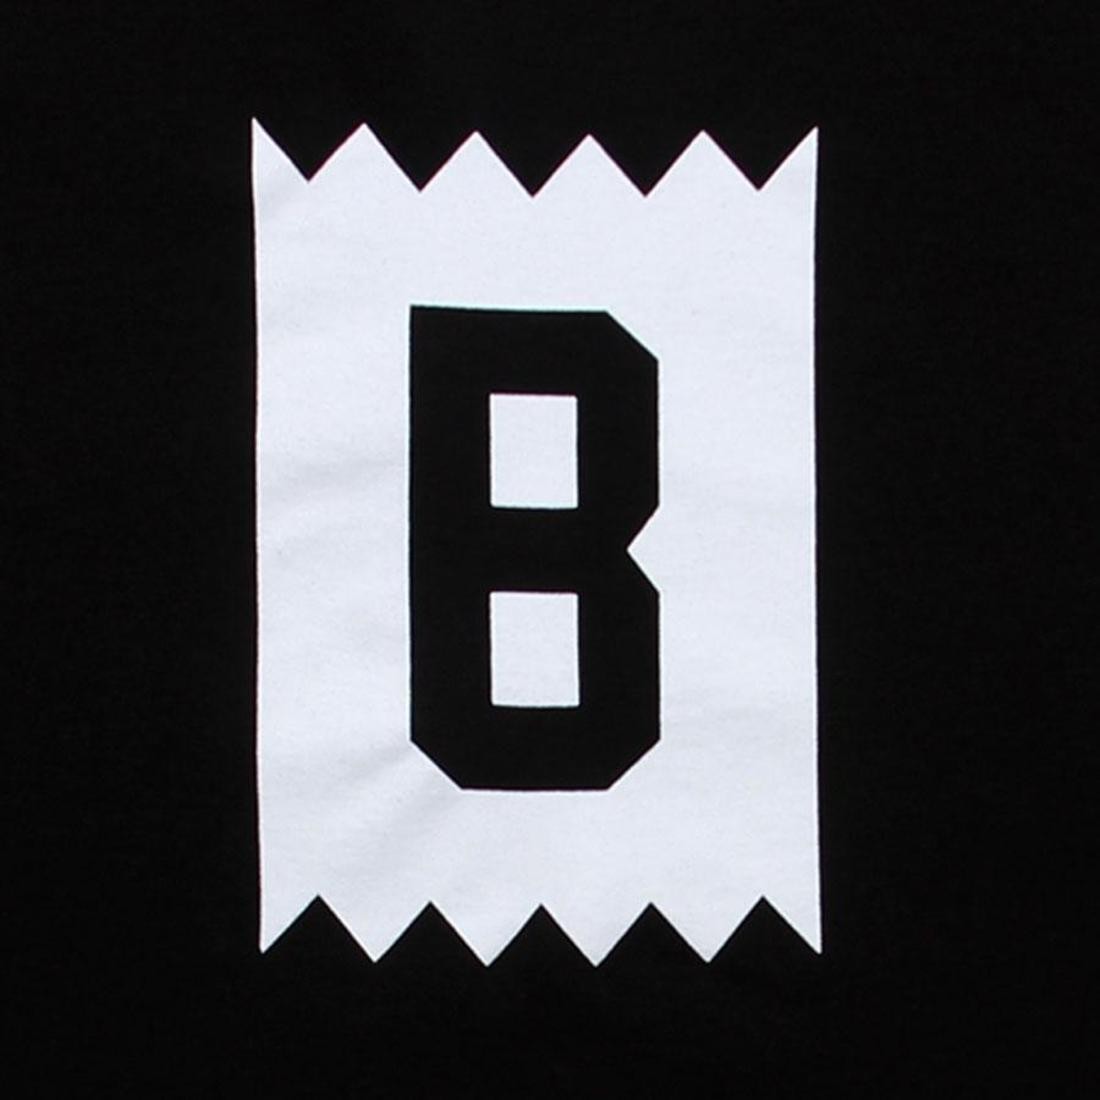 BAIT B Logo Tee (black / black)